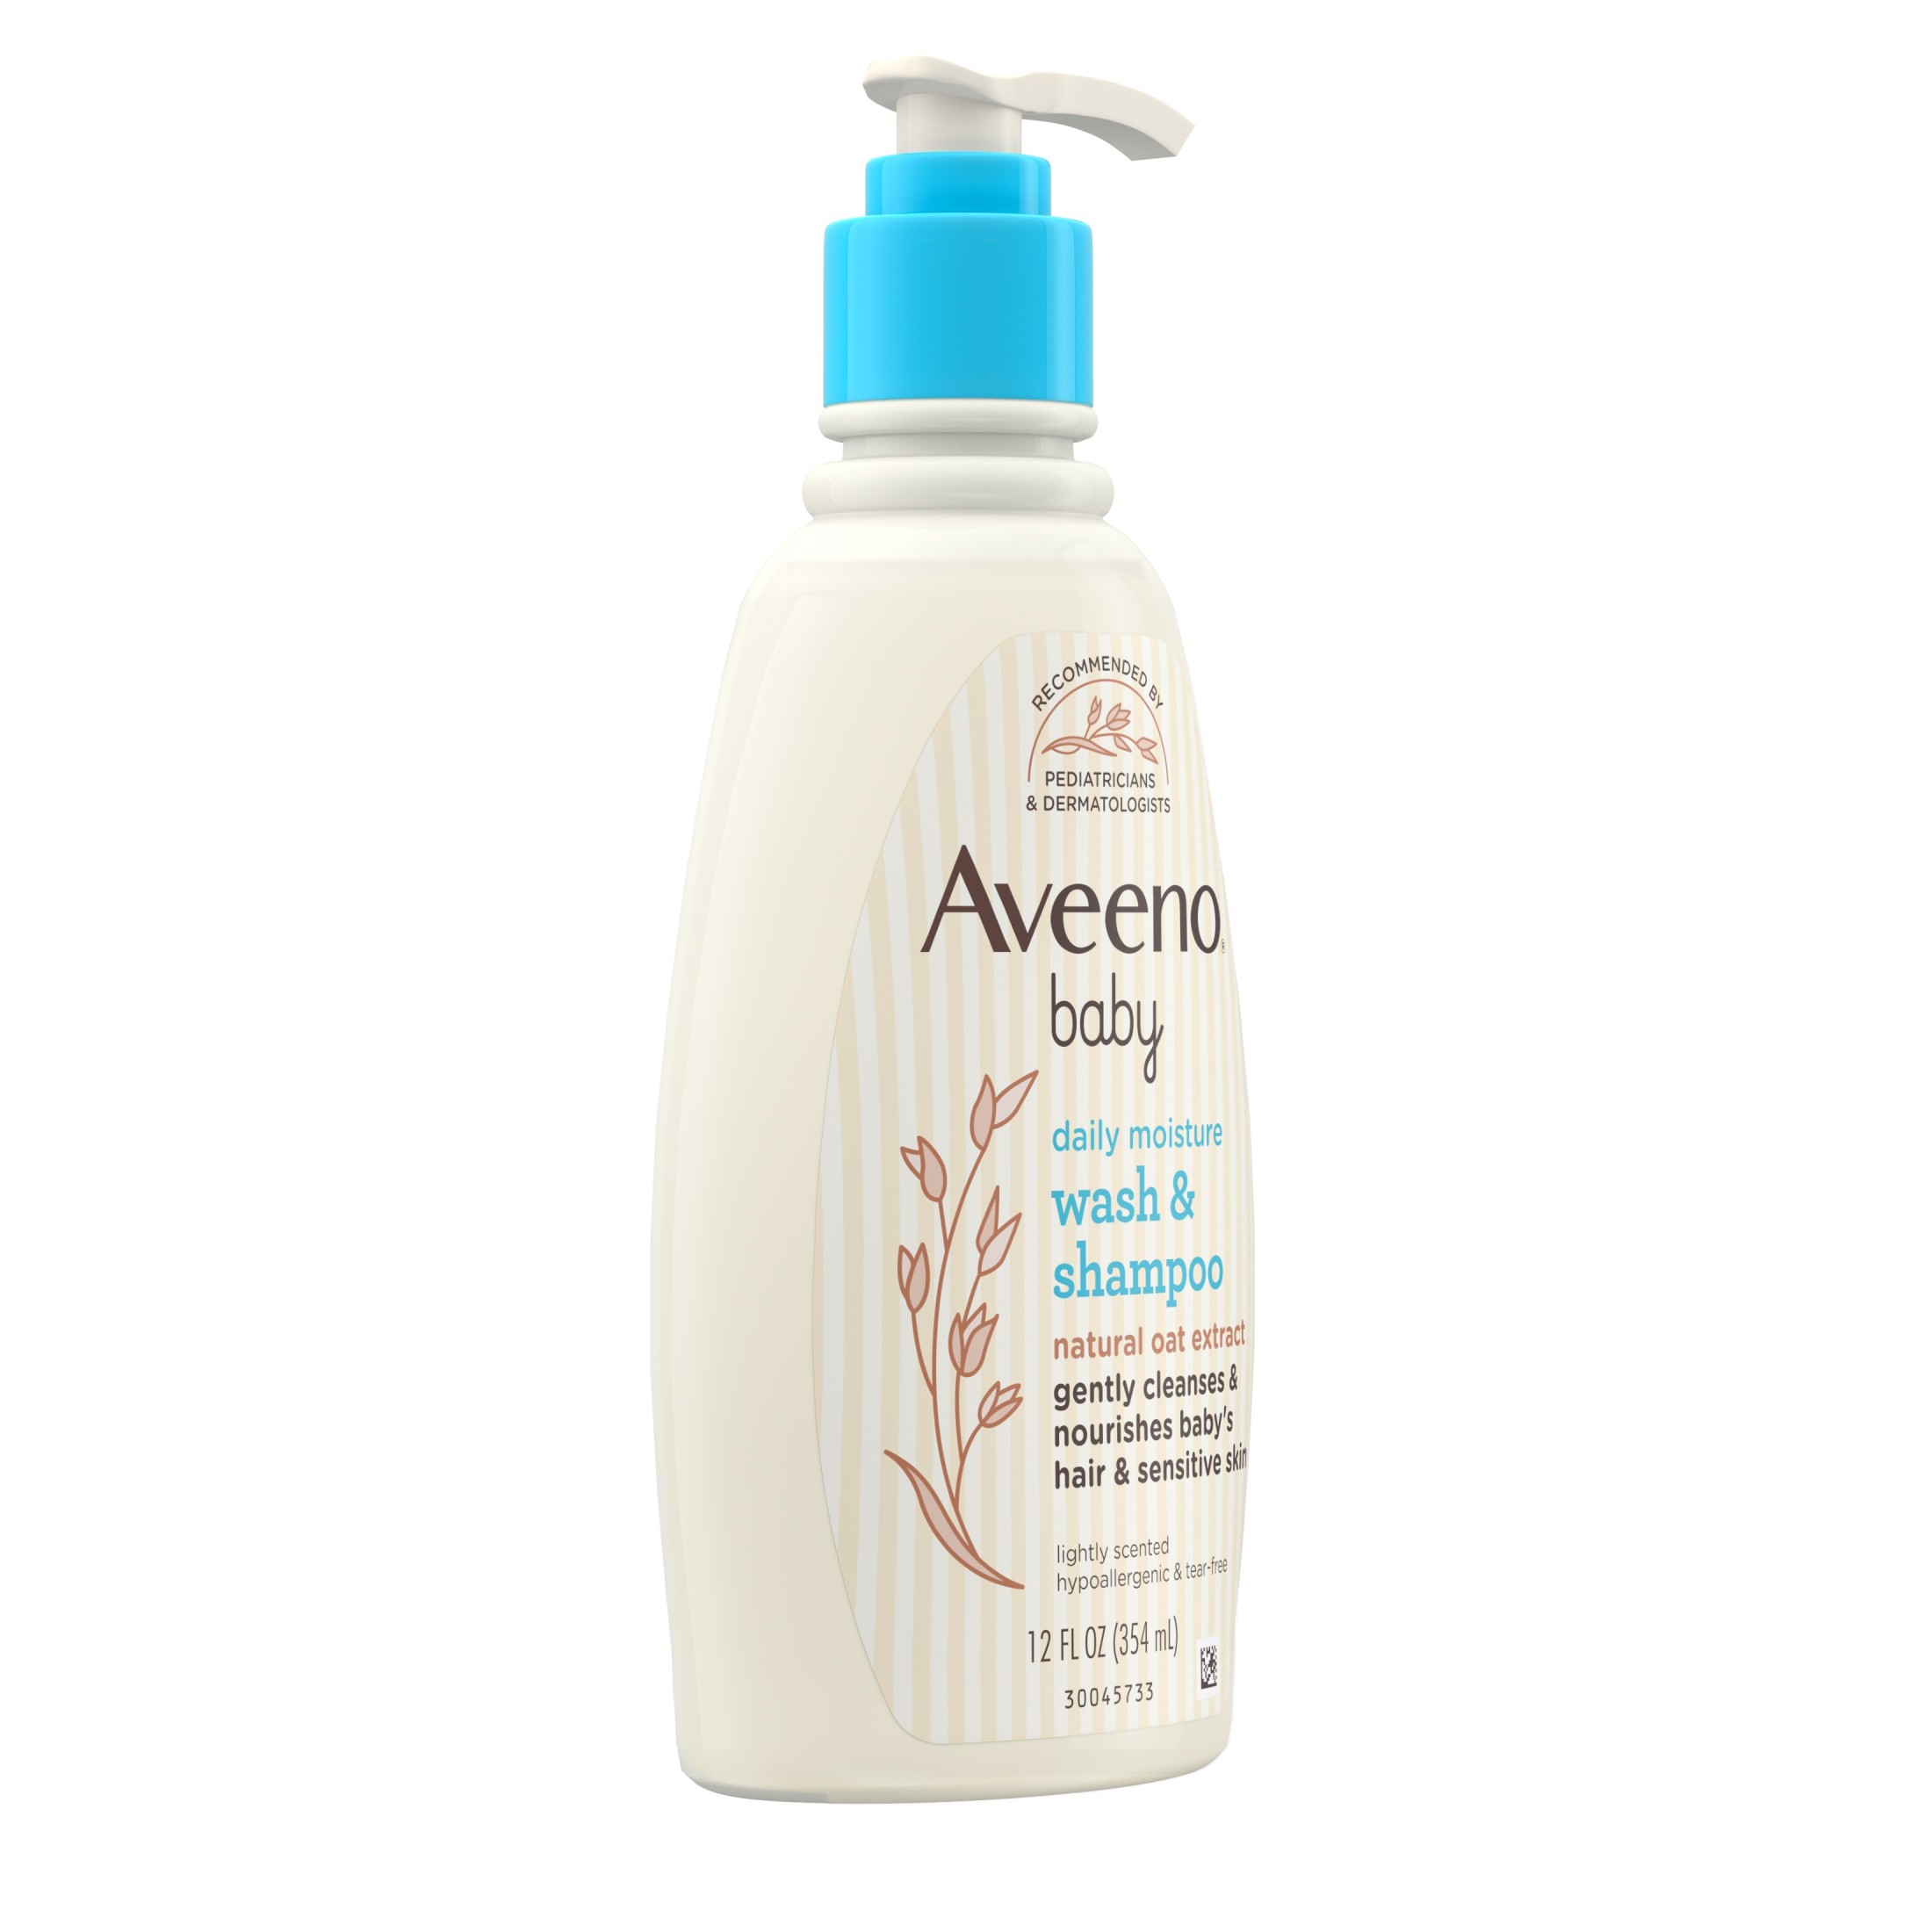 Aveeno Baby Daily Moisture Body Wash & Shampoo, Oat Extract, 12 fl. oz - image 9 of 14